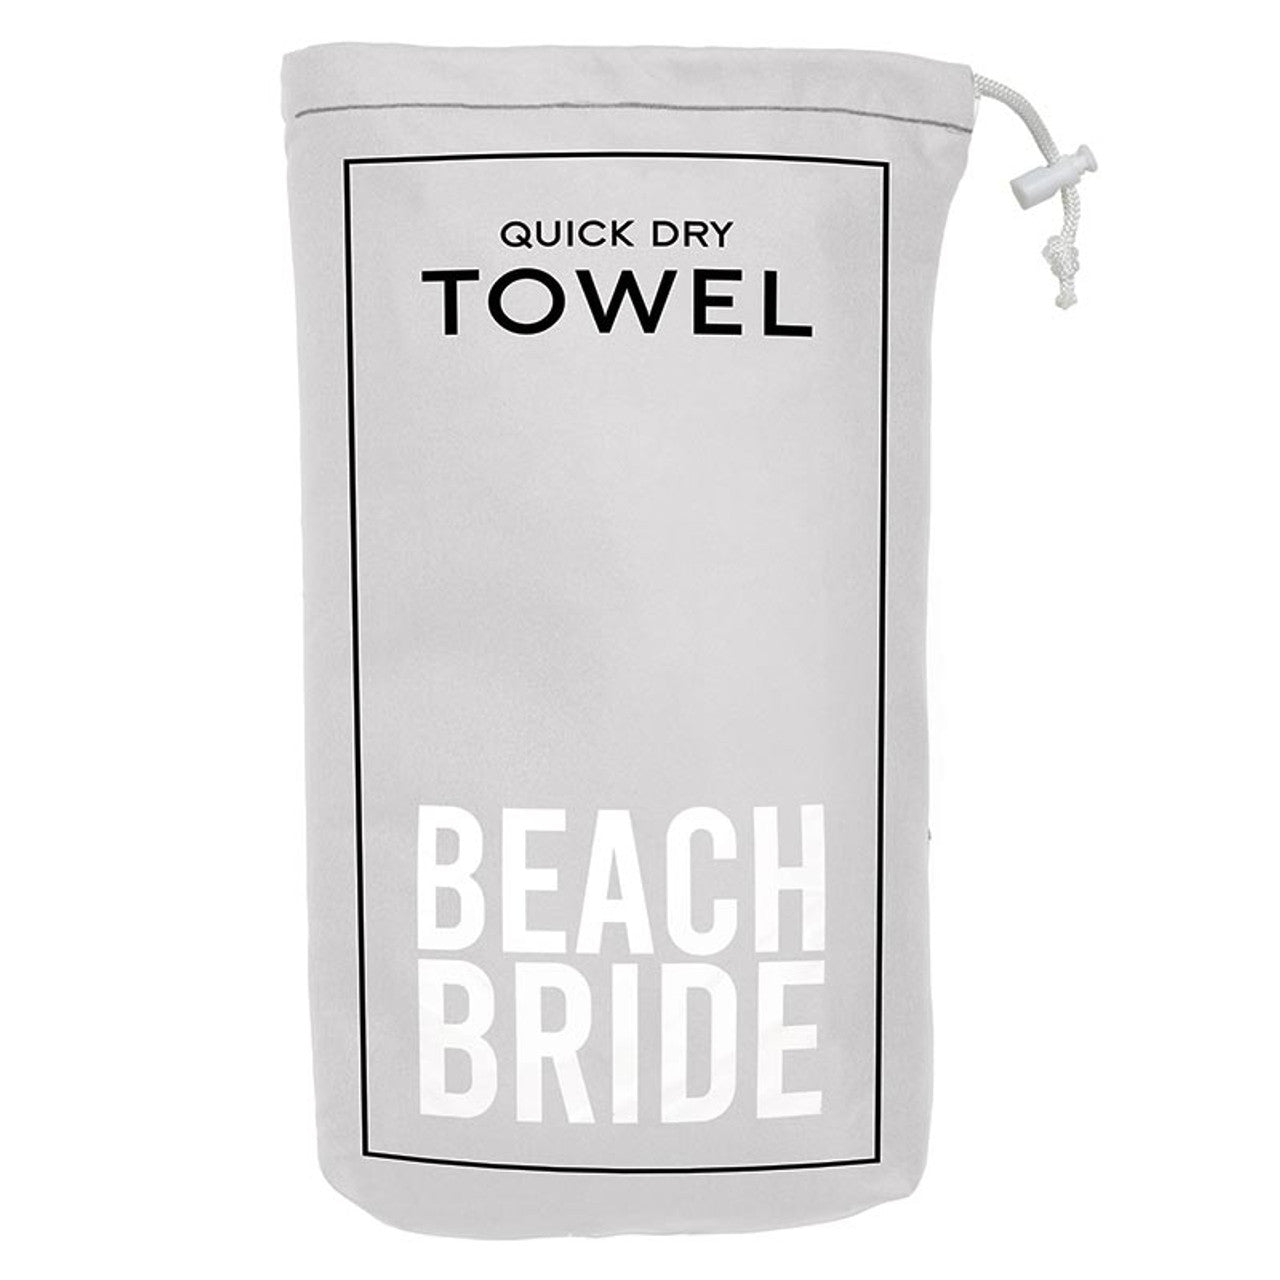 Quick Dry Travel Beach Towel - Beach Bride